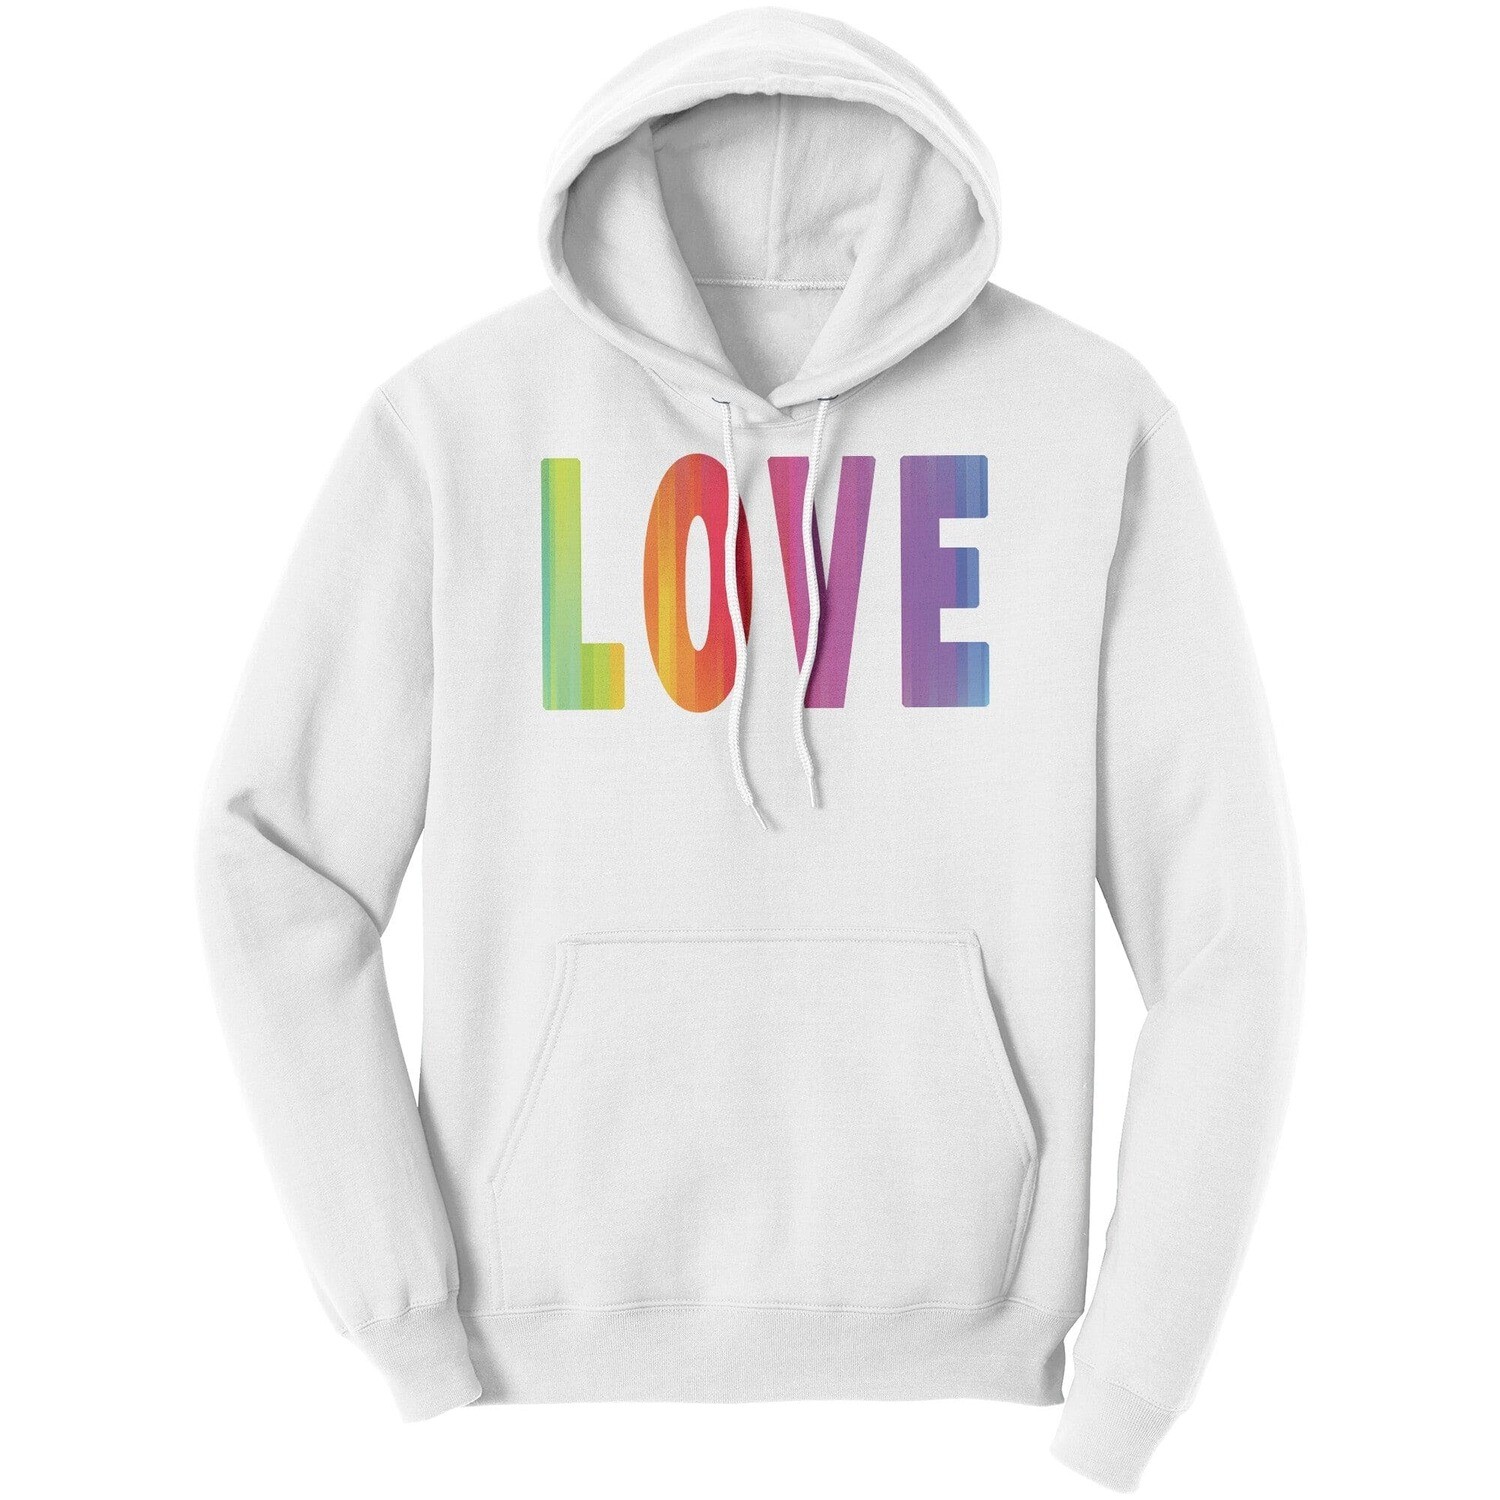 Uniquely You Graphic Hoodie Sweatshirt, Love Rainbow Print Hooded Shirt